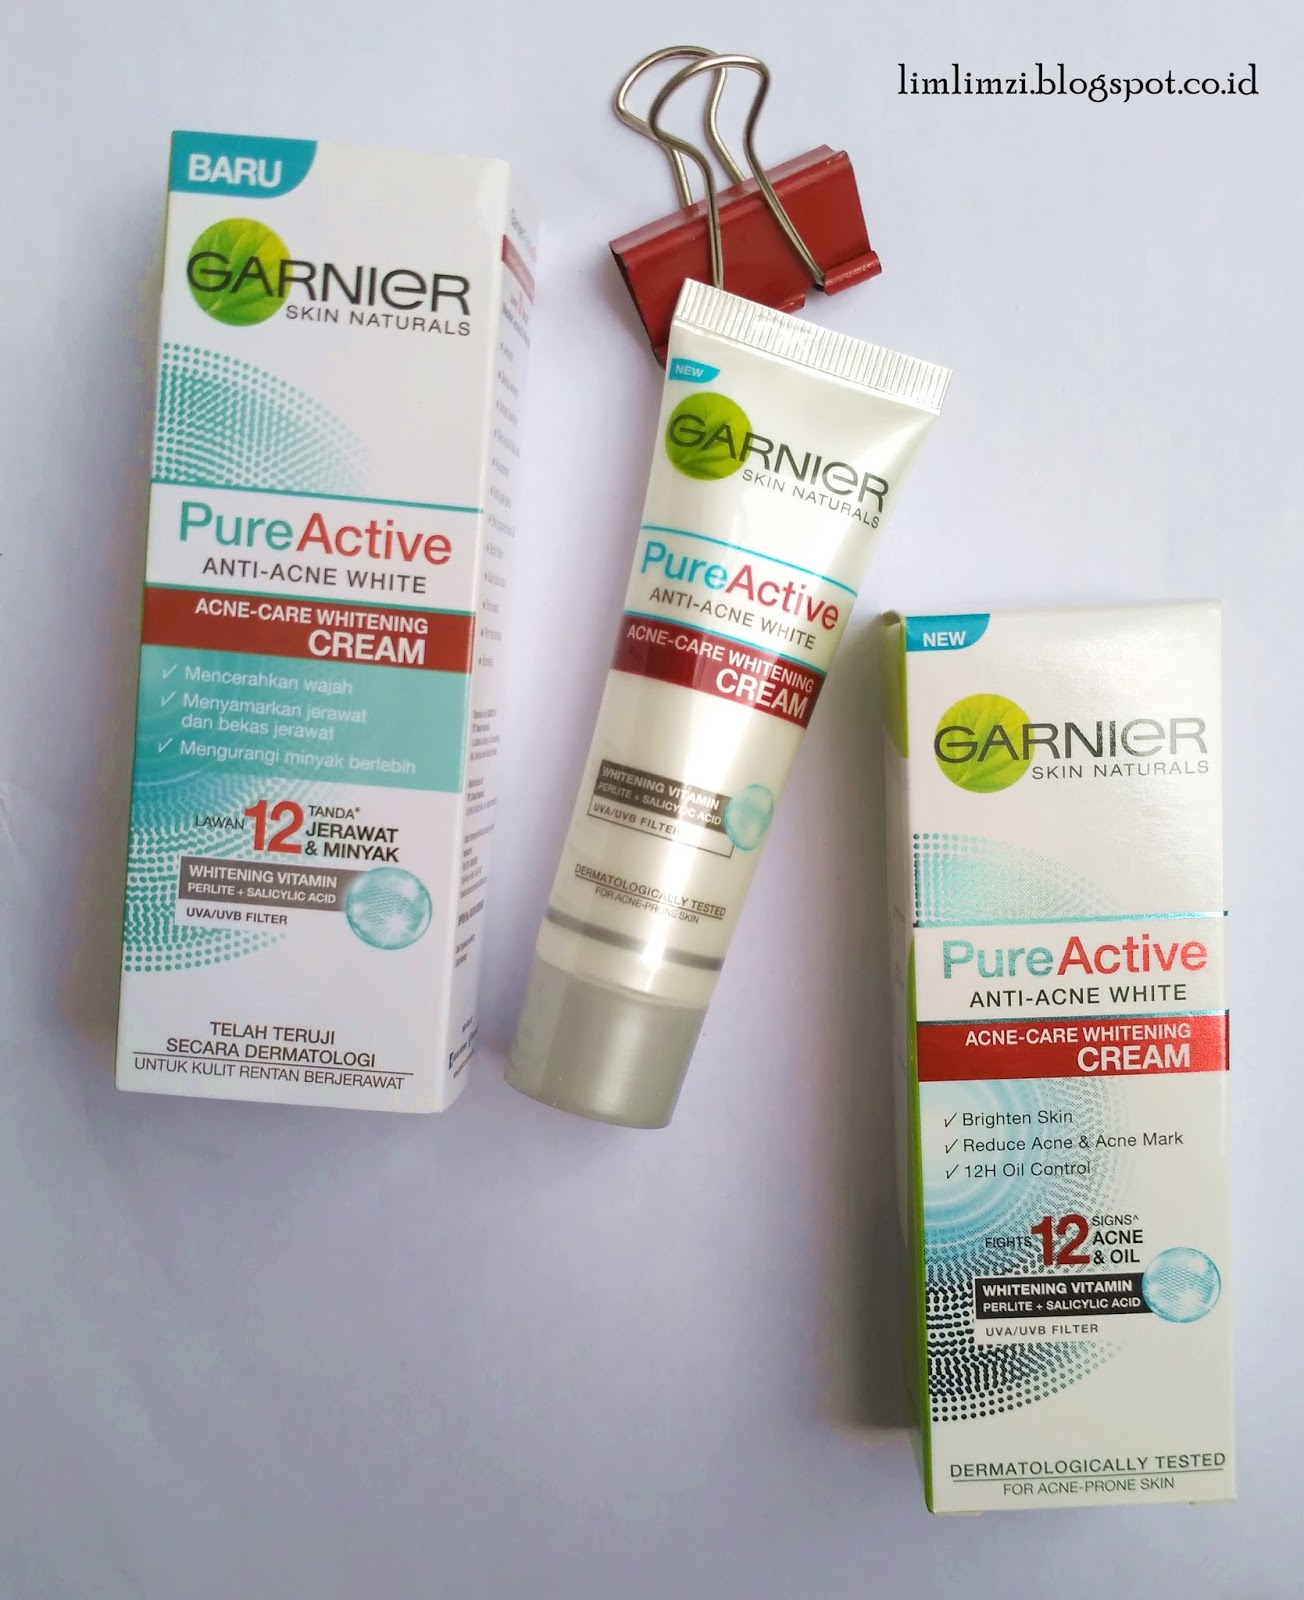 Garnier Pure Active Acne-Care Whitening Cream